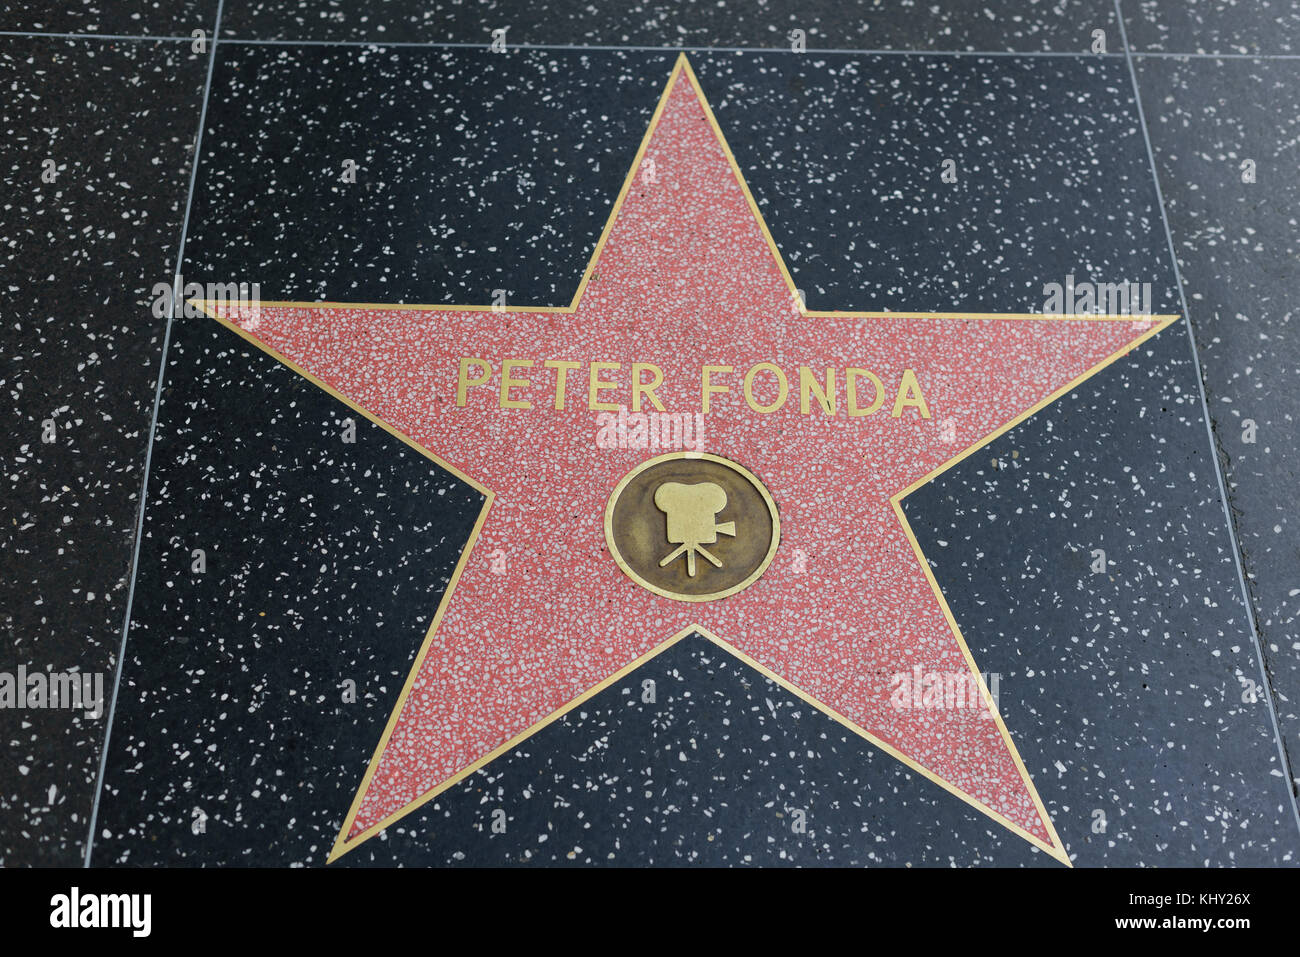 HOLLYWOOD, CA - DICEMBRE 06: Peter fonda star sulla Hollywood Walk of Fame a Hollywood, California il 6 dicembre 2016. Foto Stock